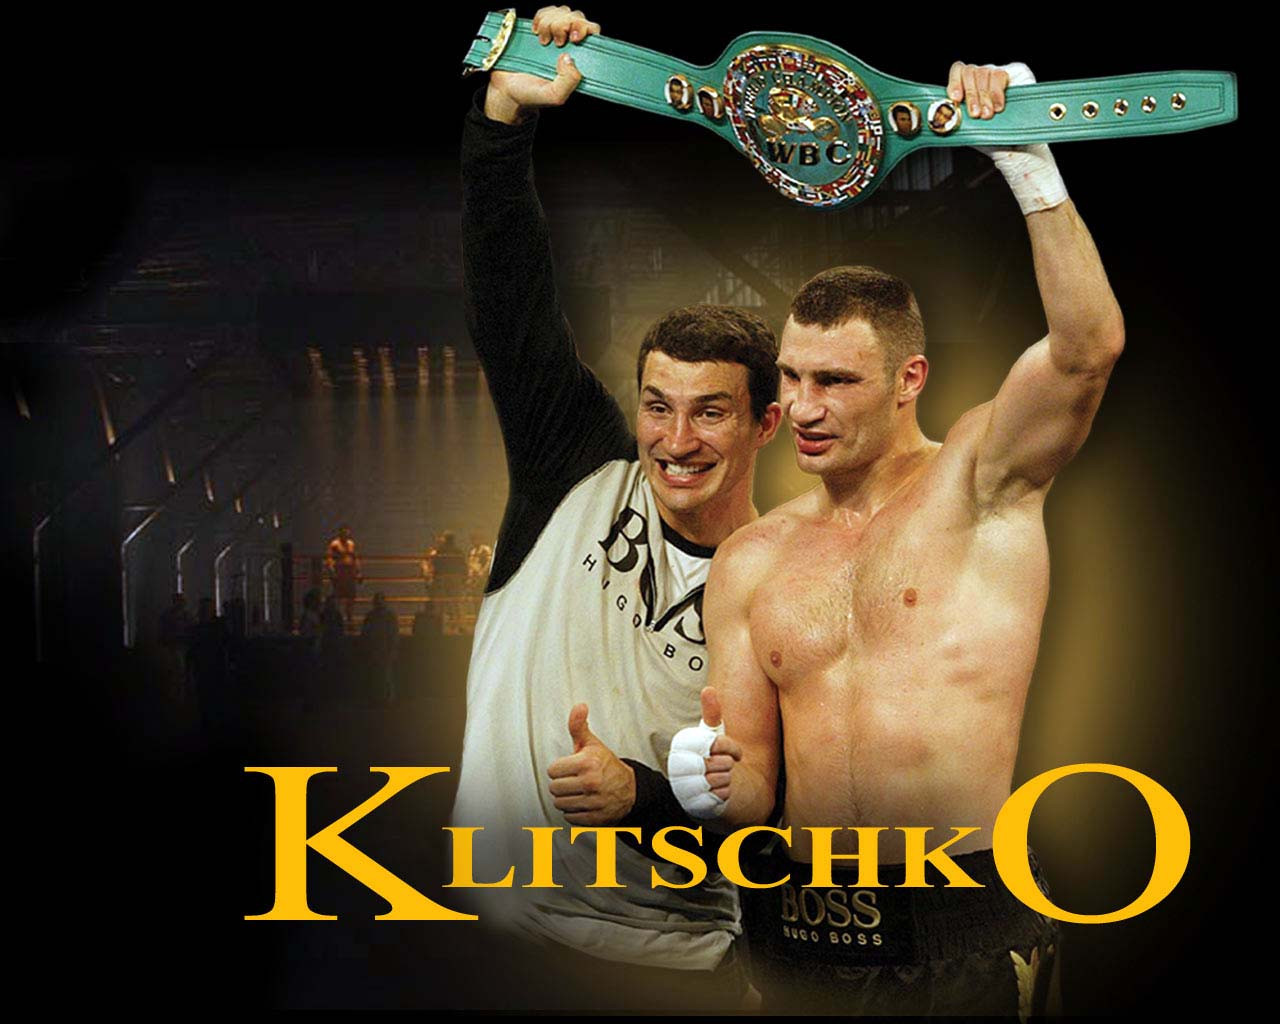 Виталий Кличко (Vitaly Klitschko)